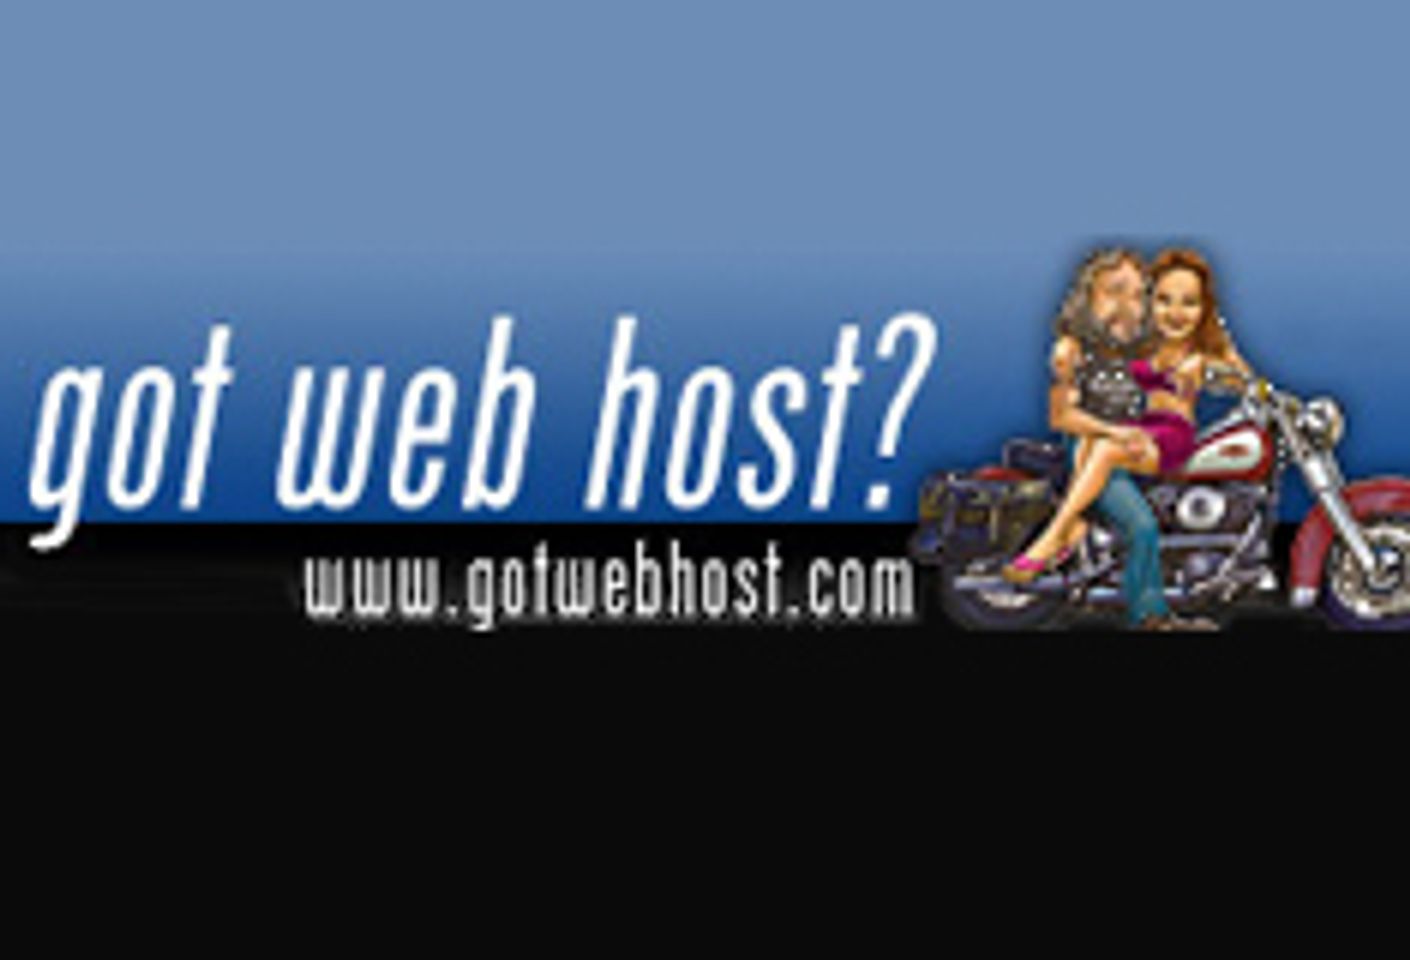 Got Web Host Offers Redundant Cloud Hosting